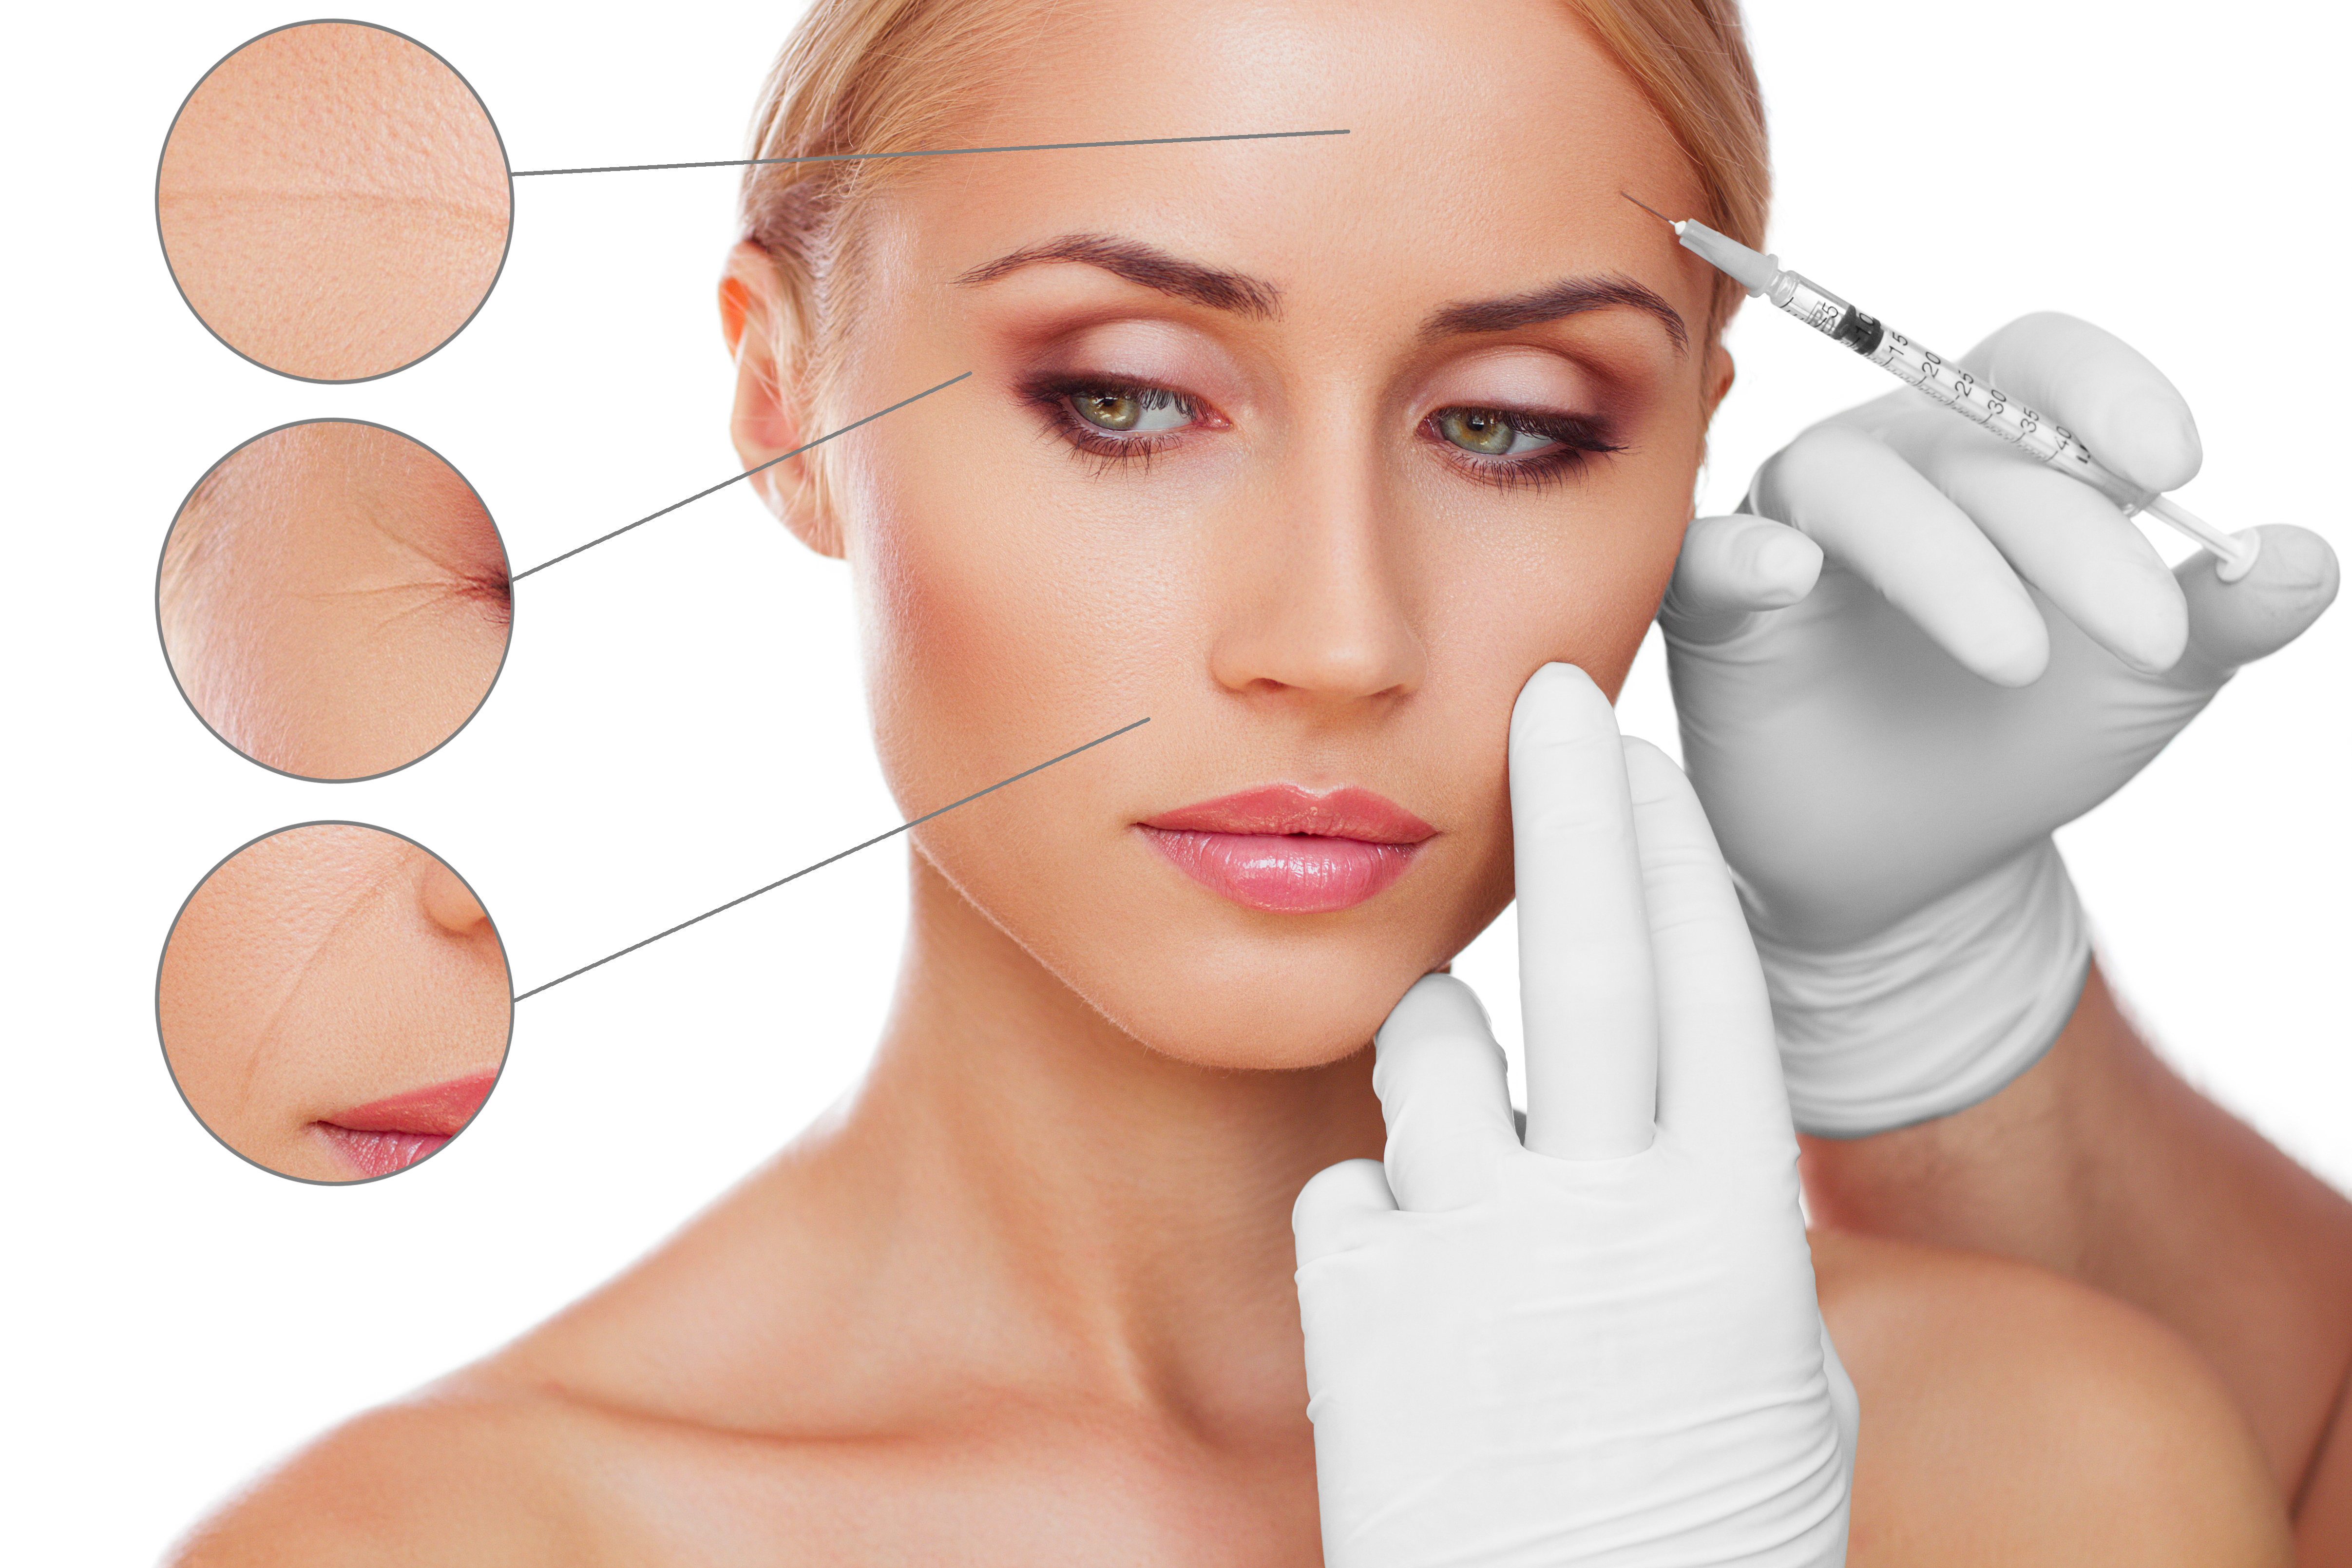 Cosmetic Procedures To Help You Look & Feel Great!